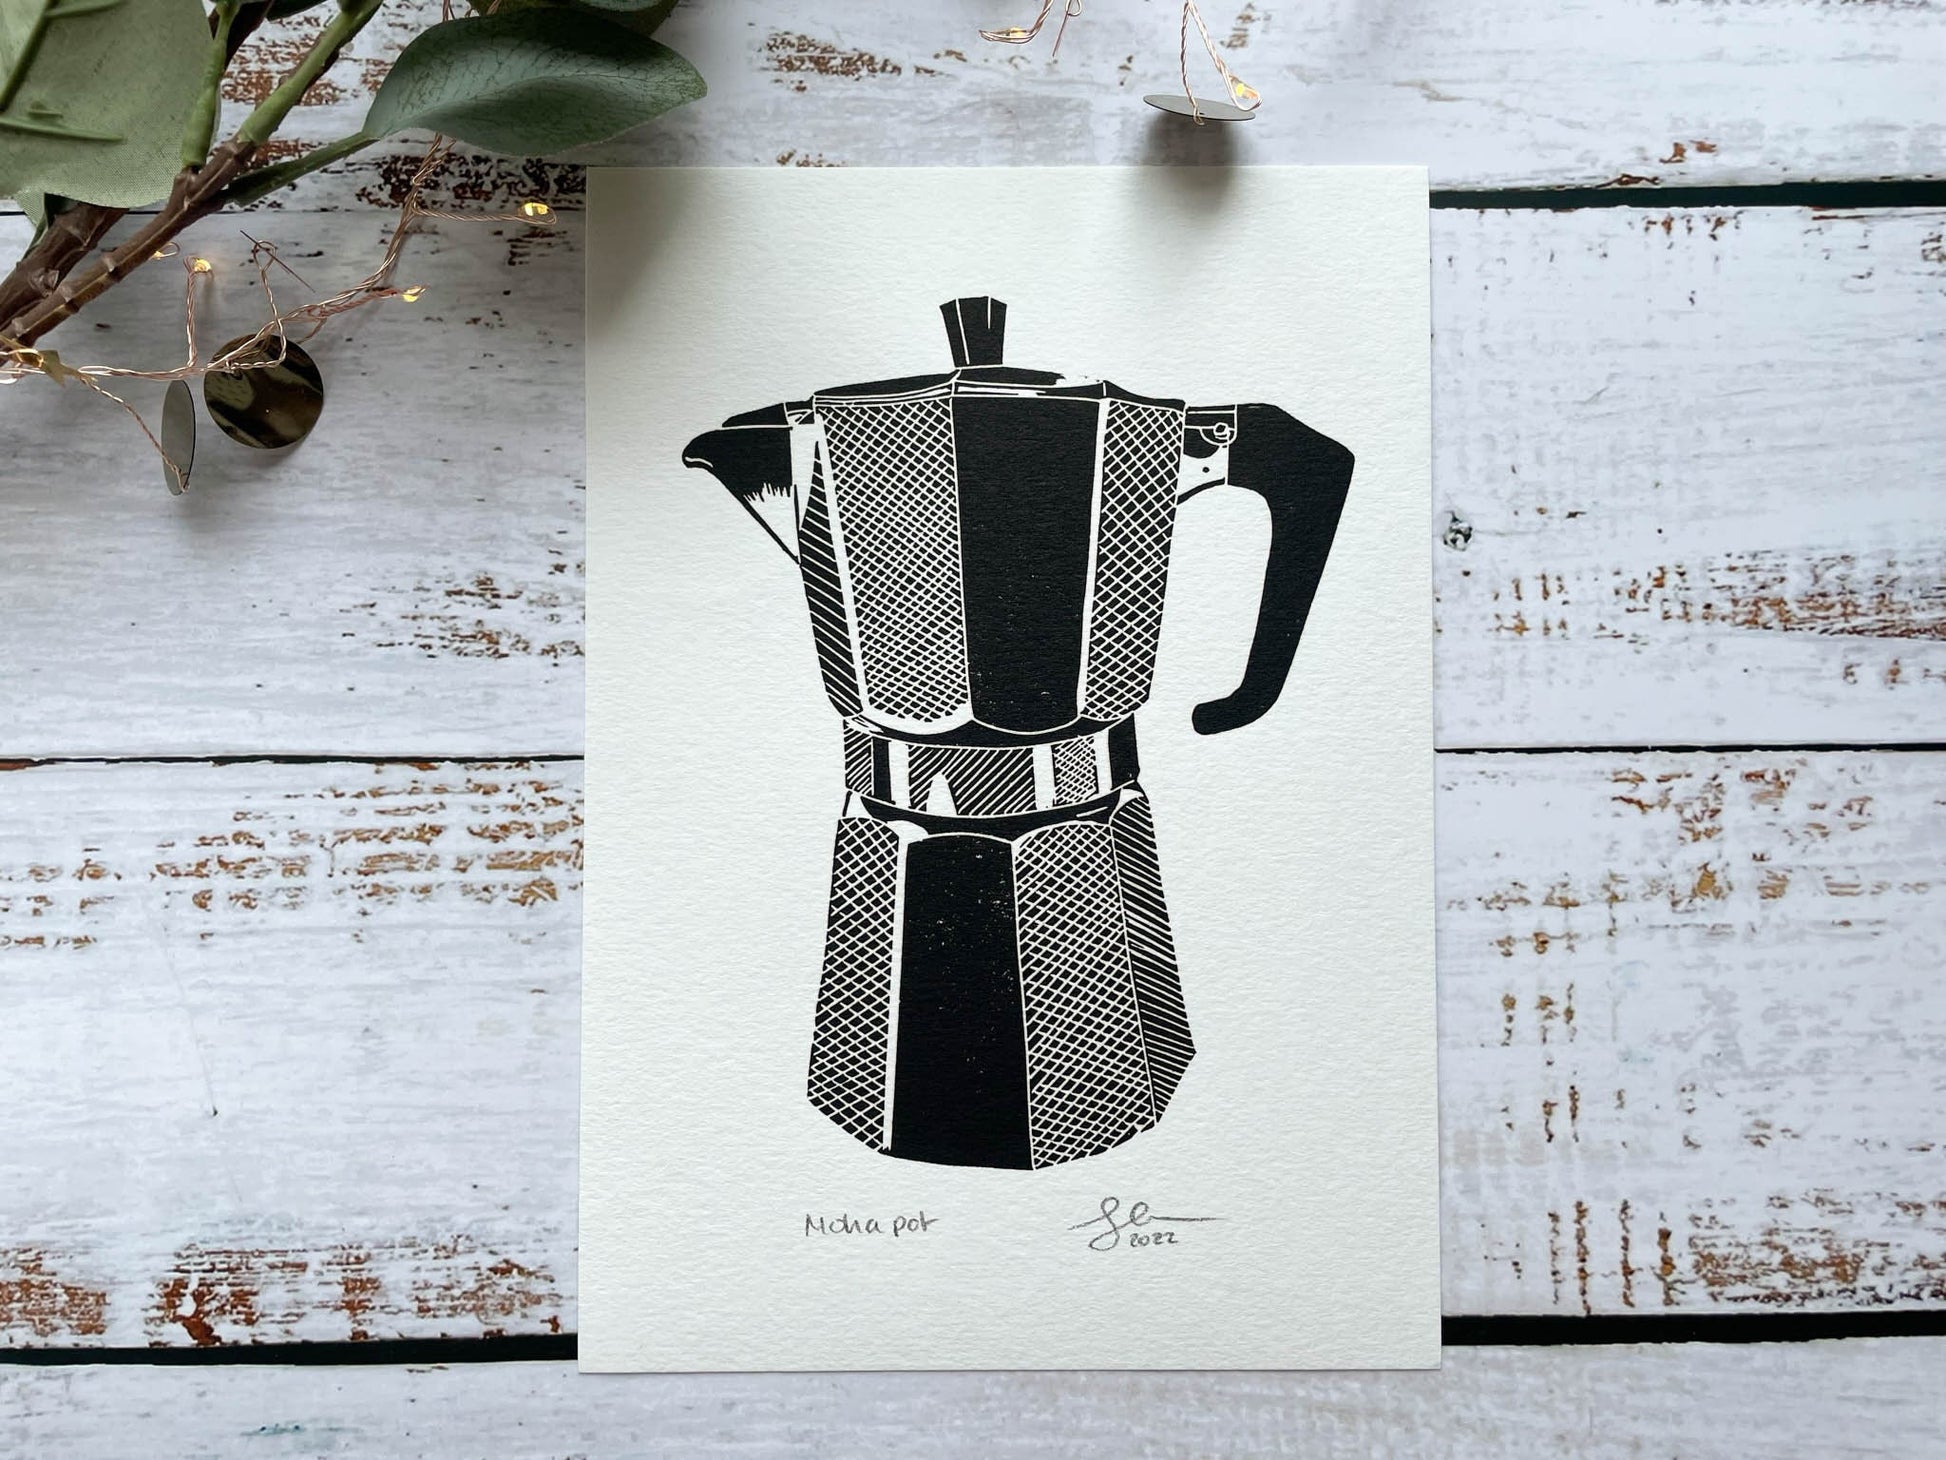 A lino print of a coffee moka pot in black